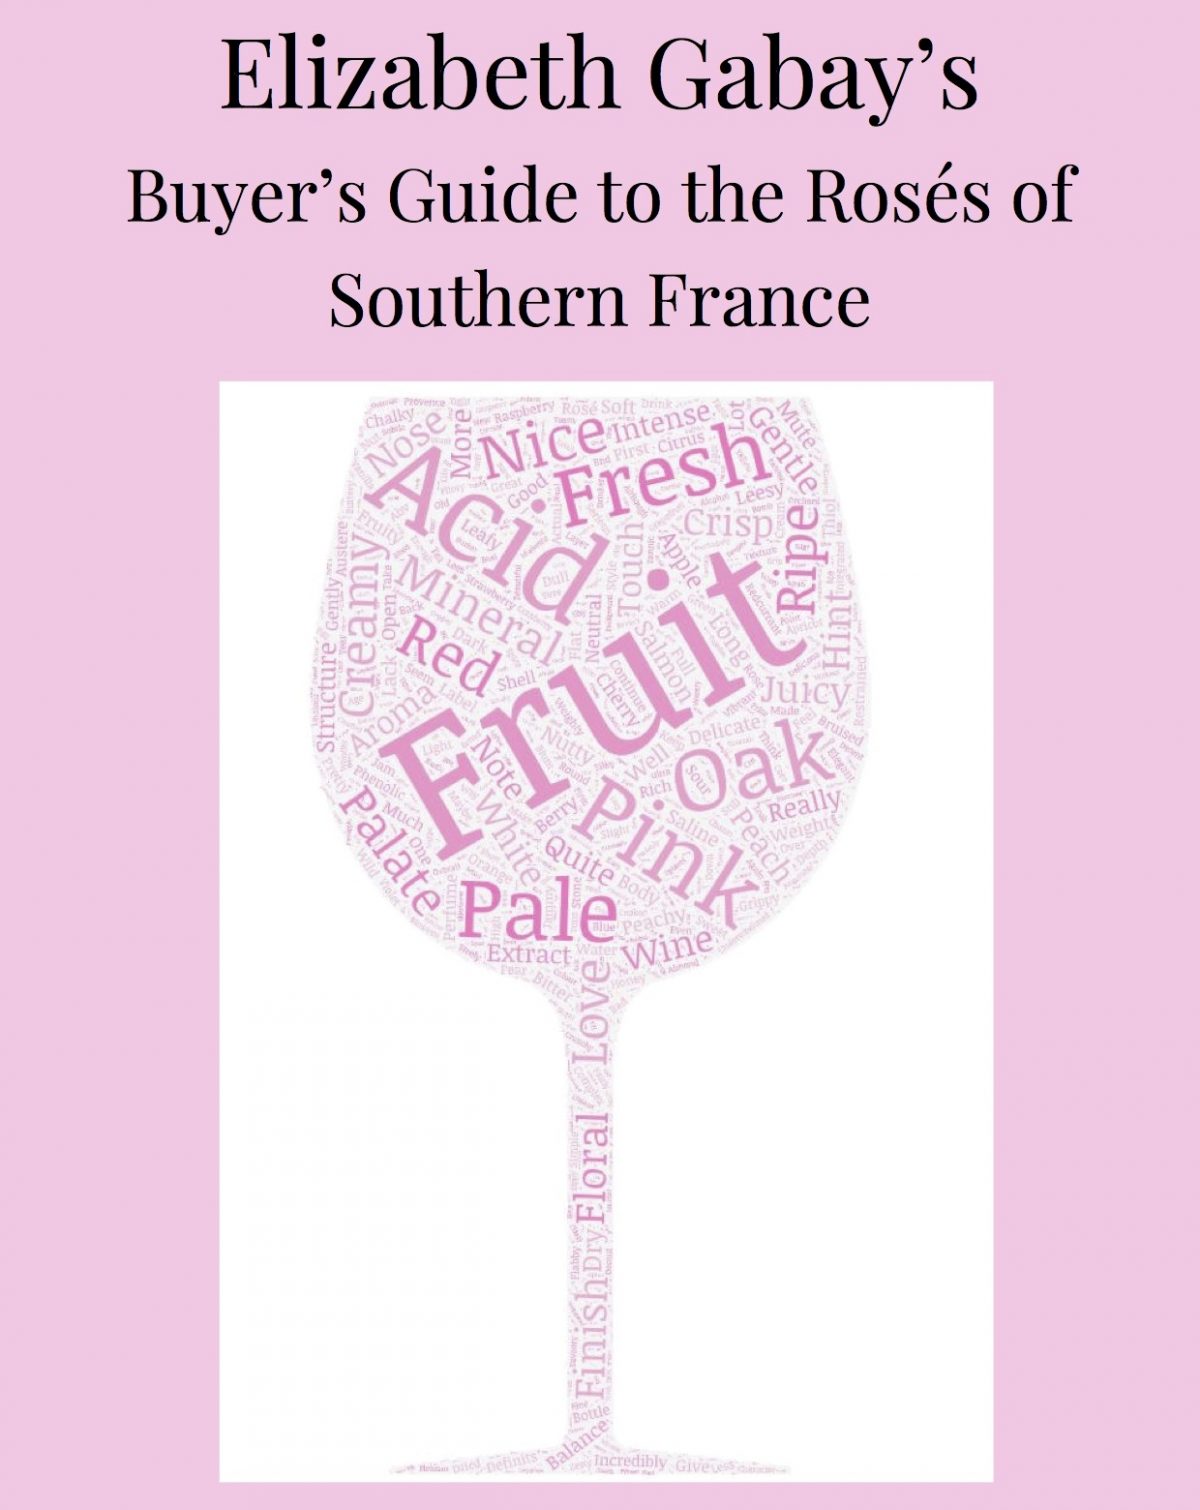 Buyer’s Guide to the Roses of Sothern France – Elizabeth Gabay